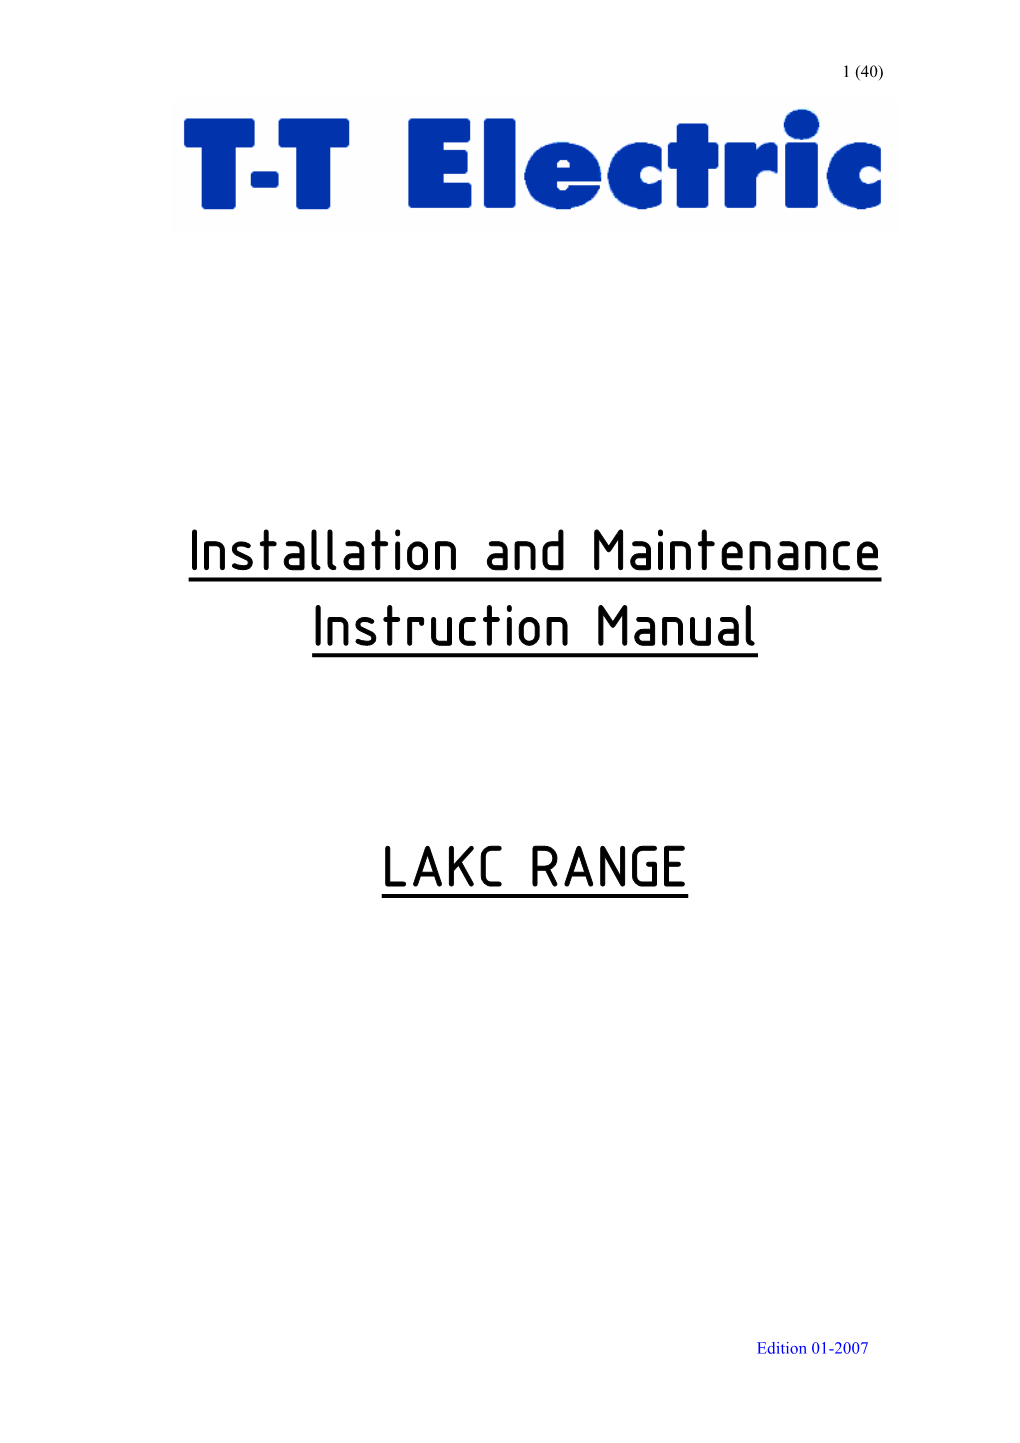 Installation and Maintenance Instruction Manual LAKC RANGE